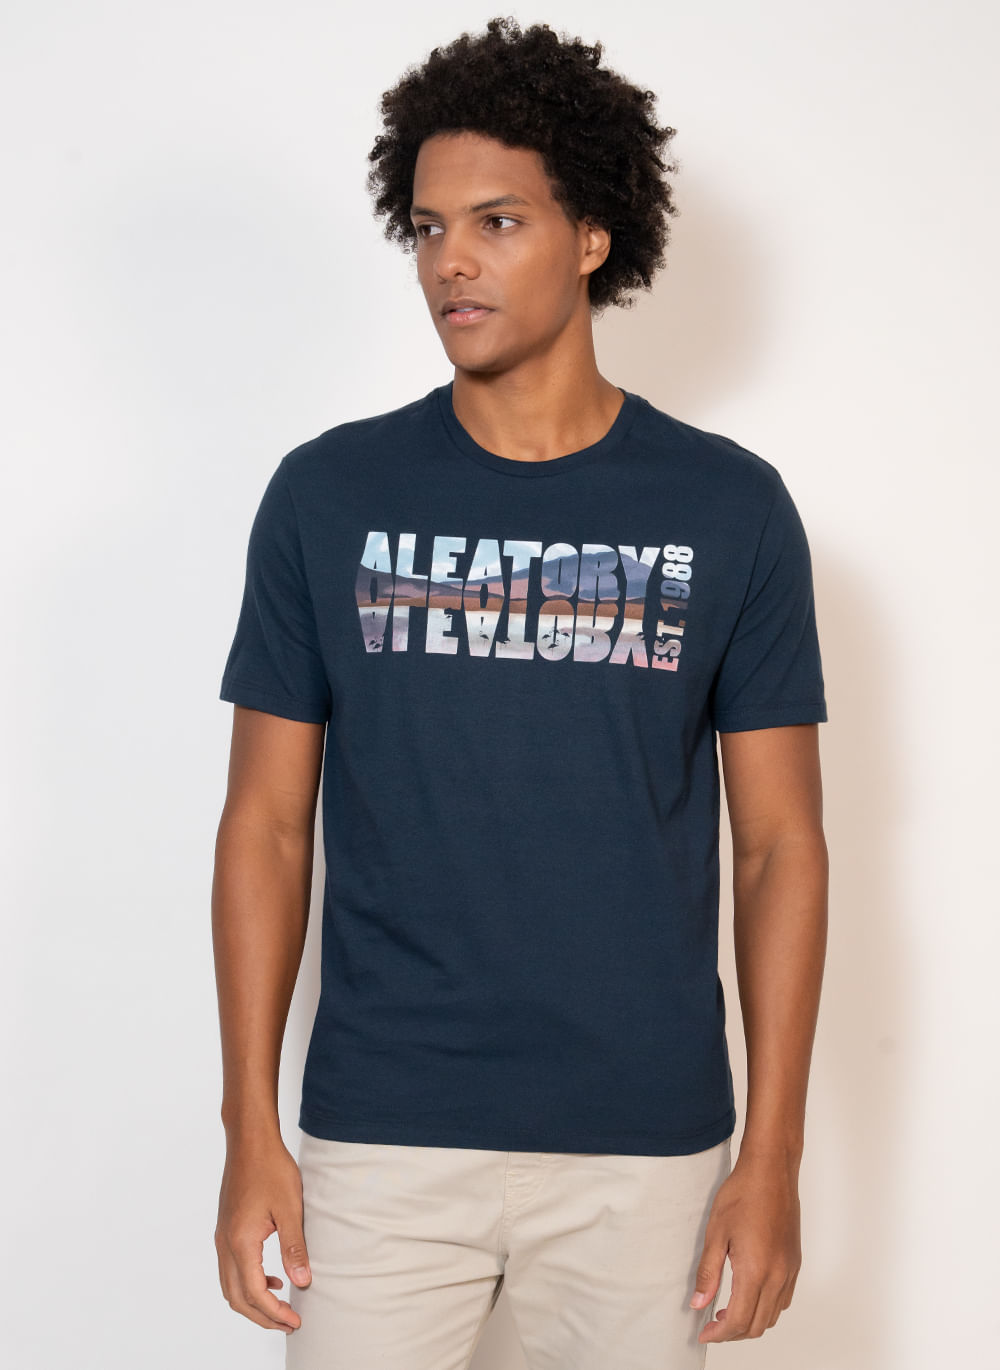 Camiseta-Estampada-Aleatory-Horizon-Marinho-Azul-Marinho-P